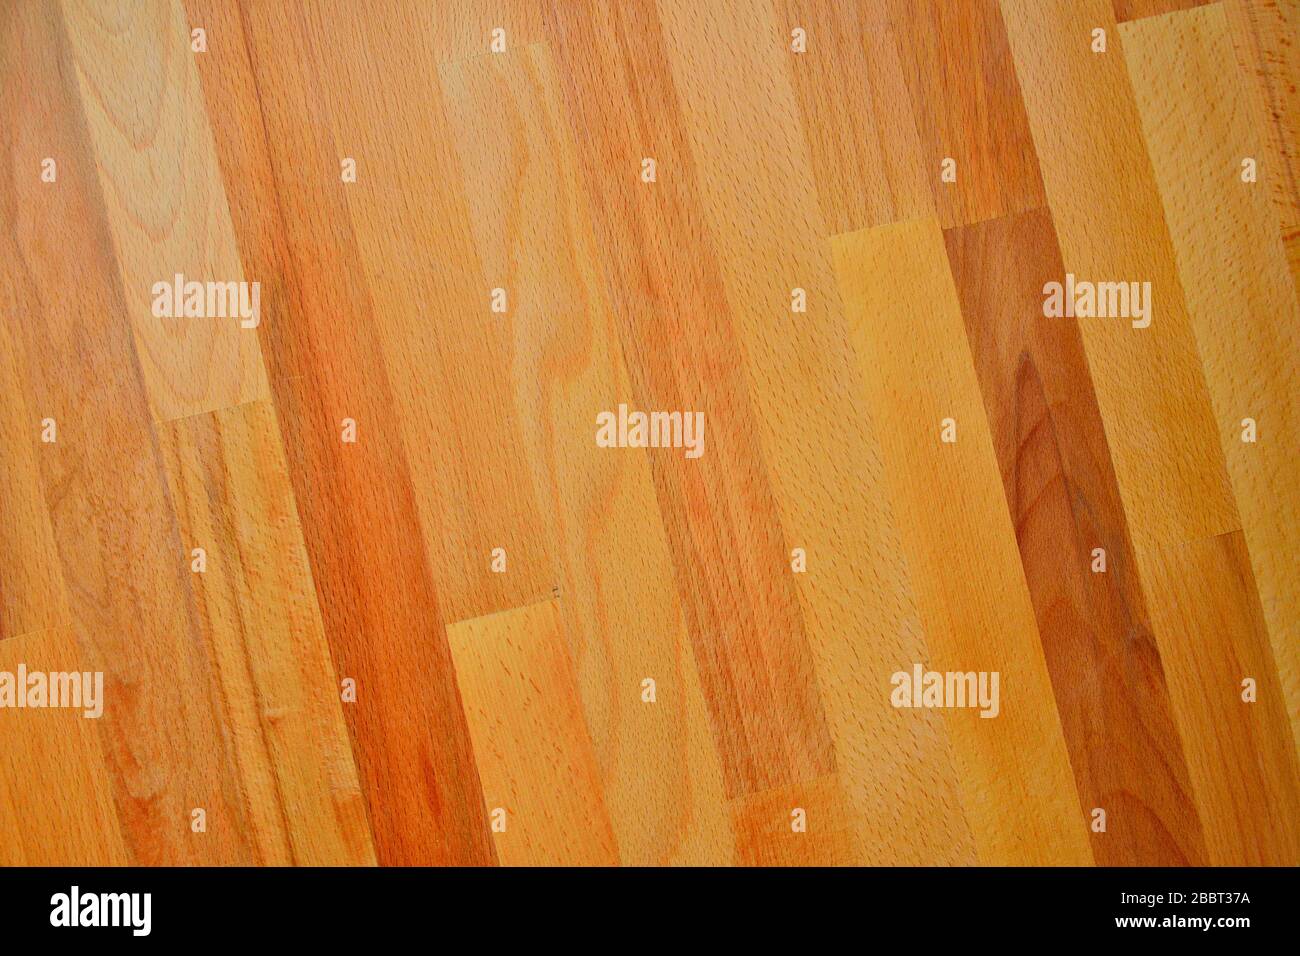 wood kitchen worktop Stock Photo